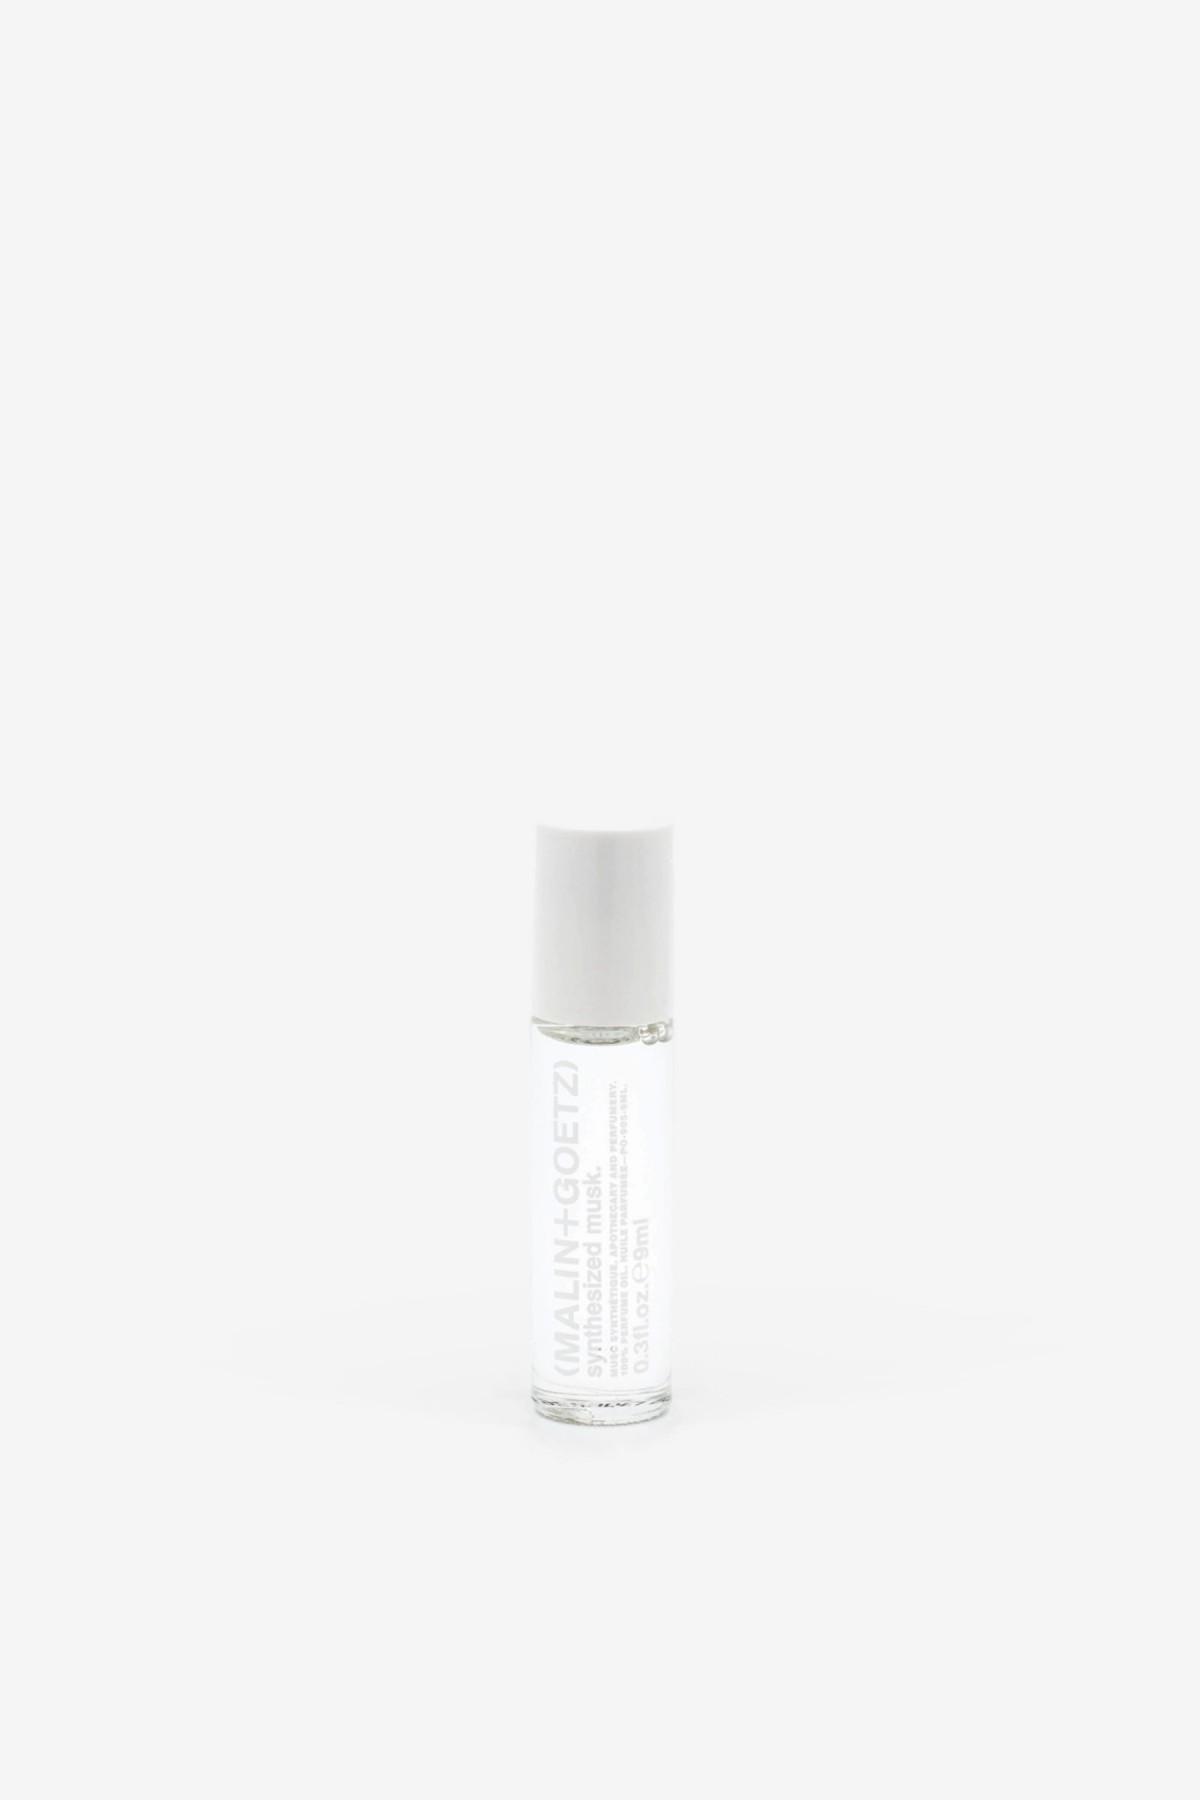 Malin+Goetz Synthesized Musk Perfume Oil 9ml in 